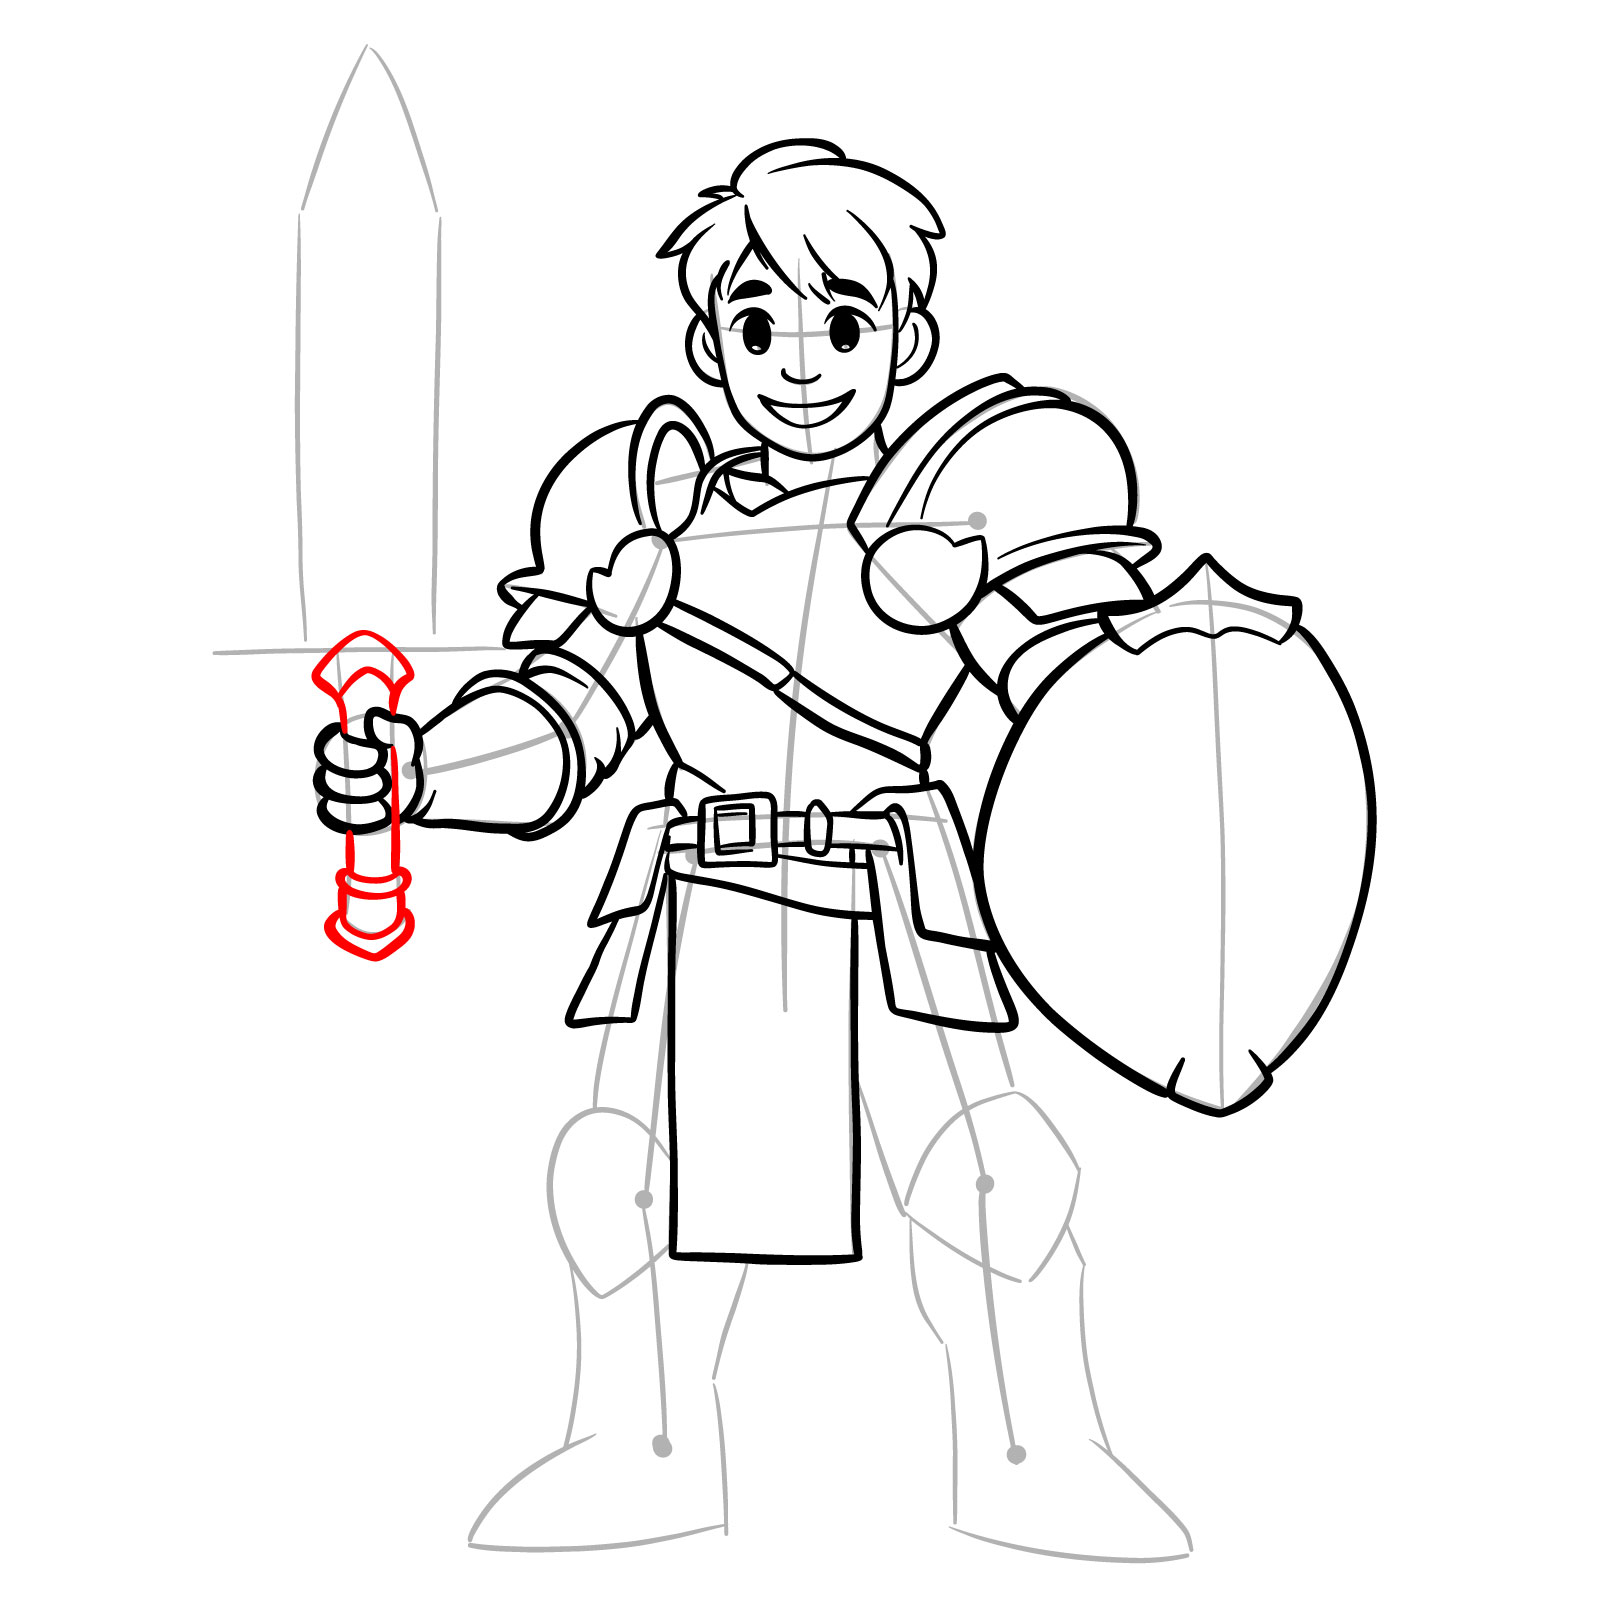 paladin step 16: sketching the sword handle